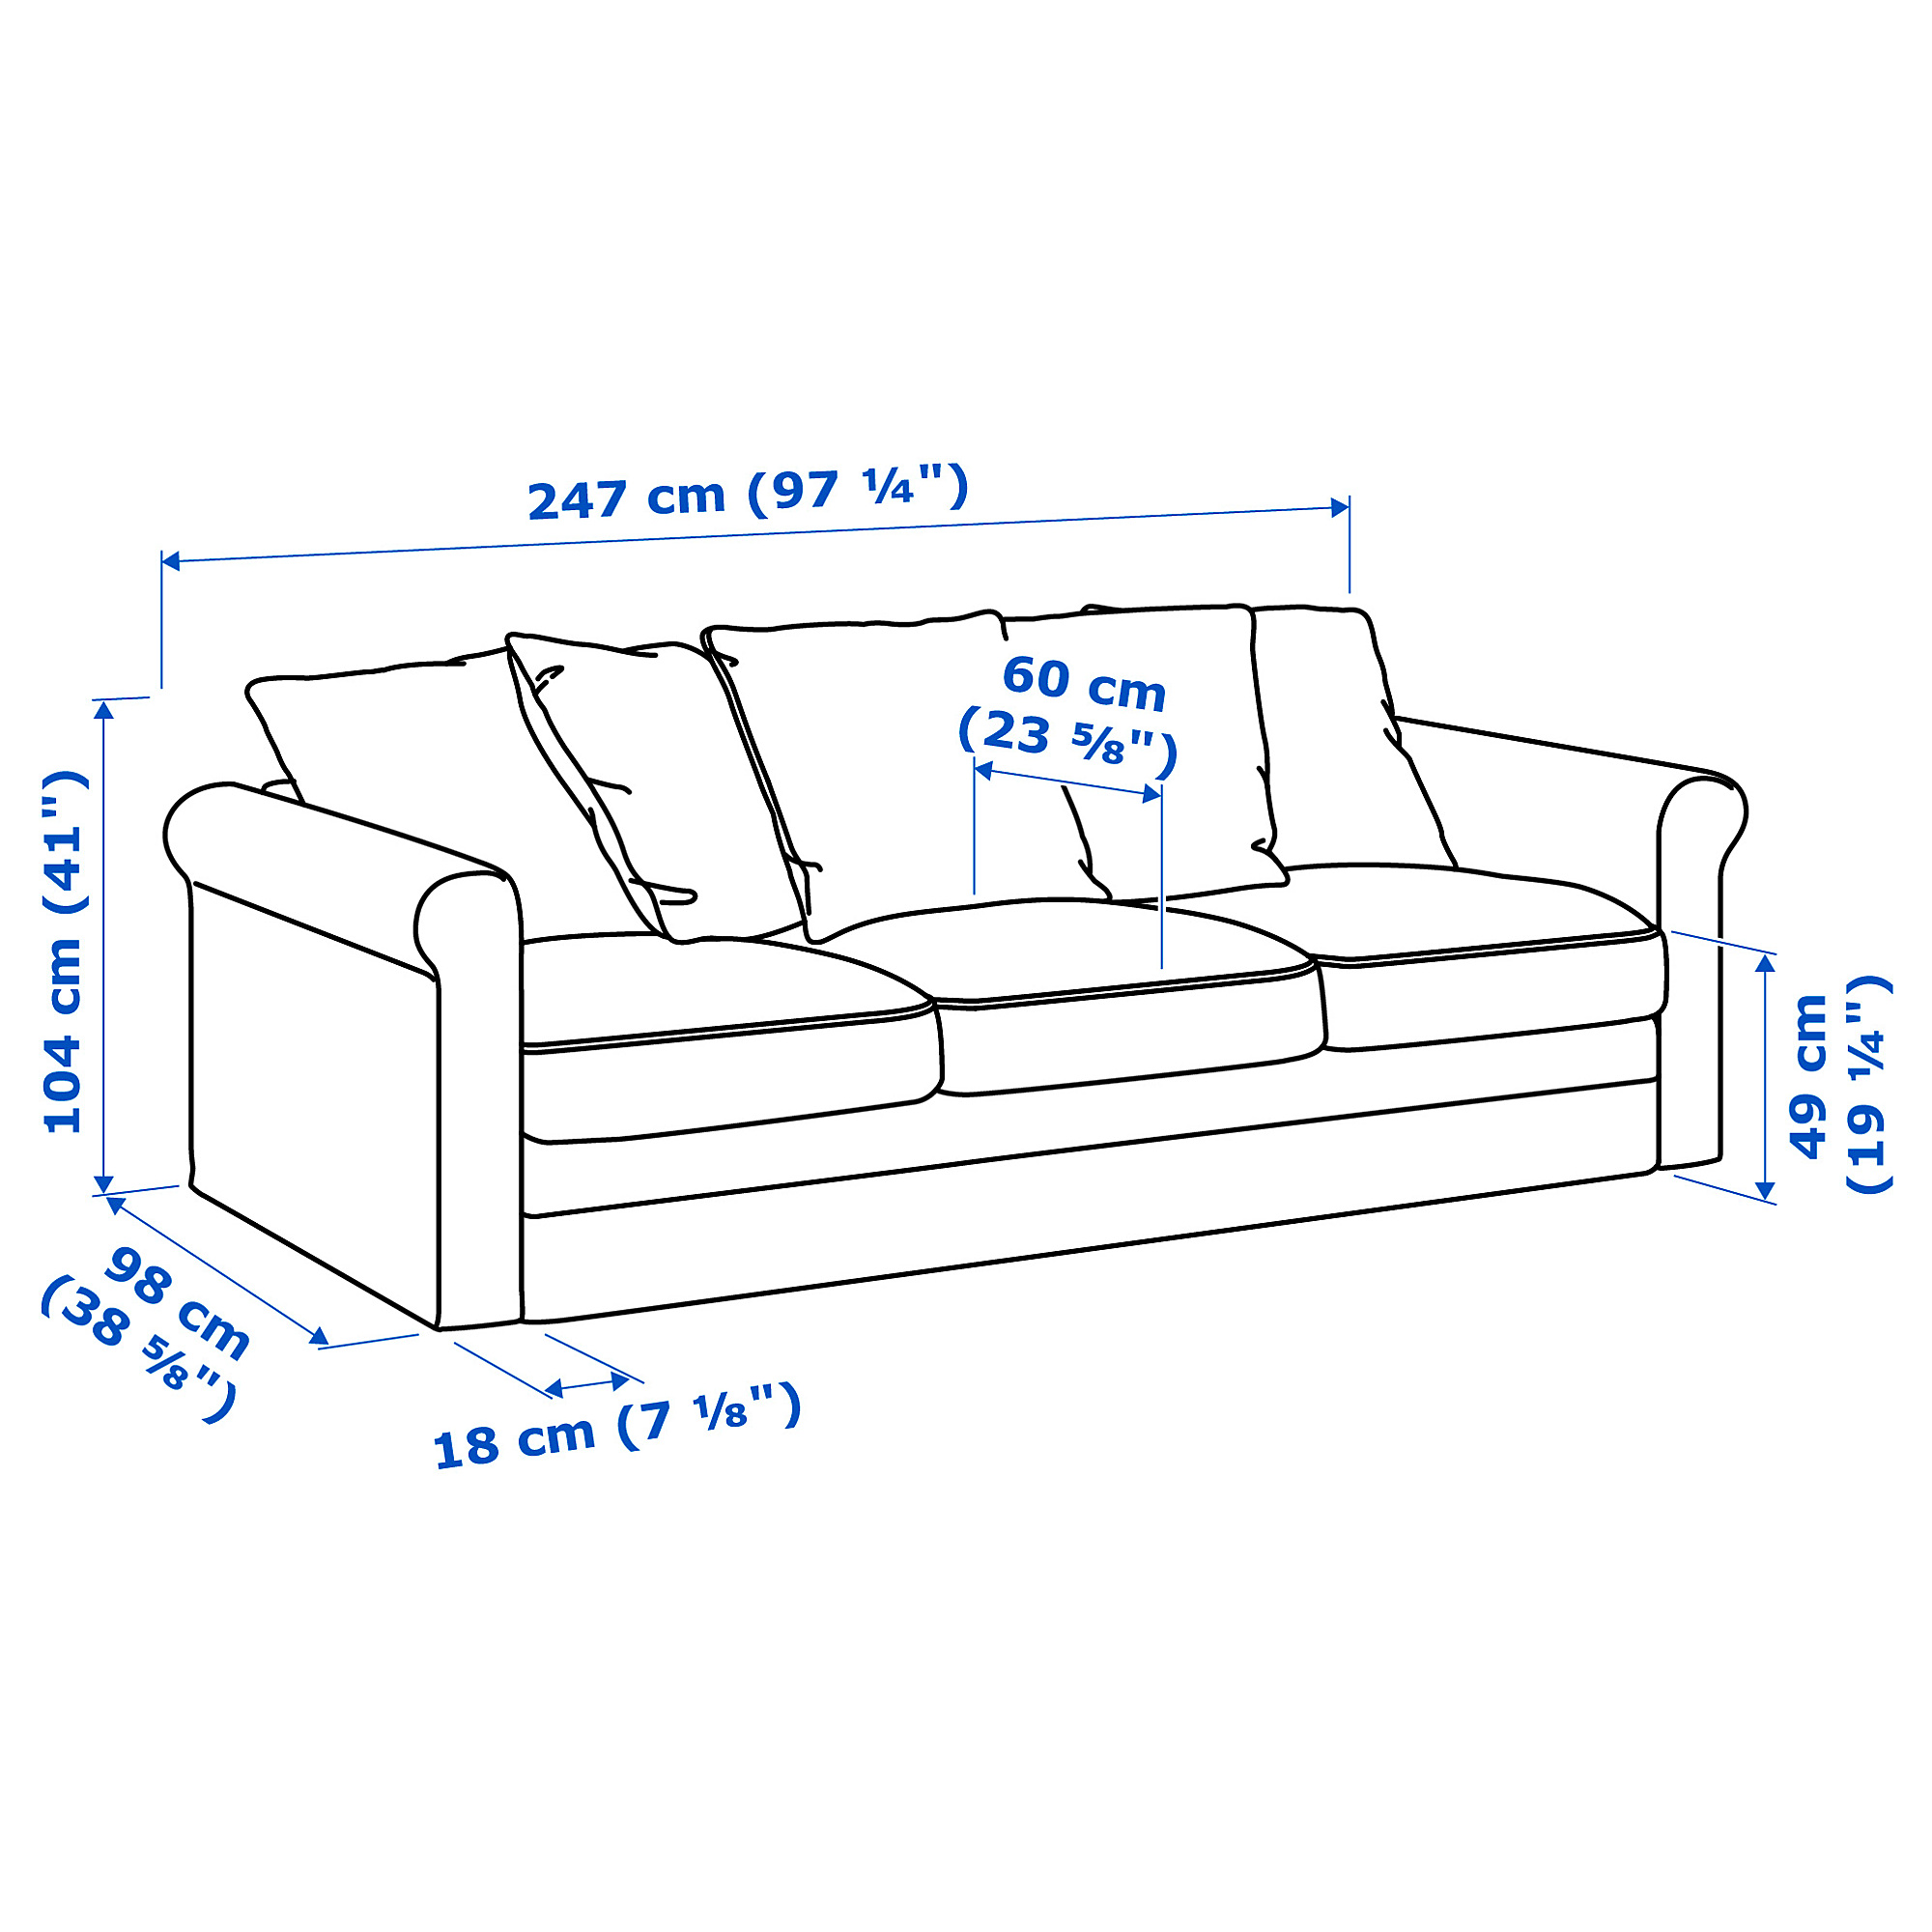 GRÖNLID 3-seat sofa